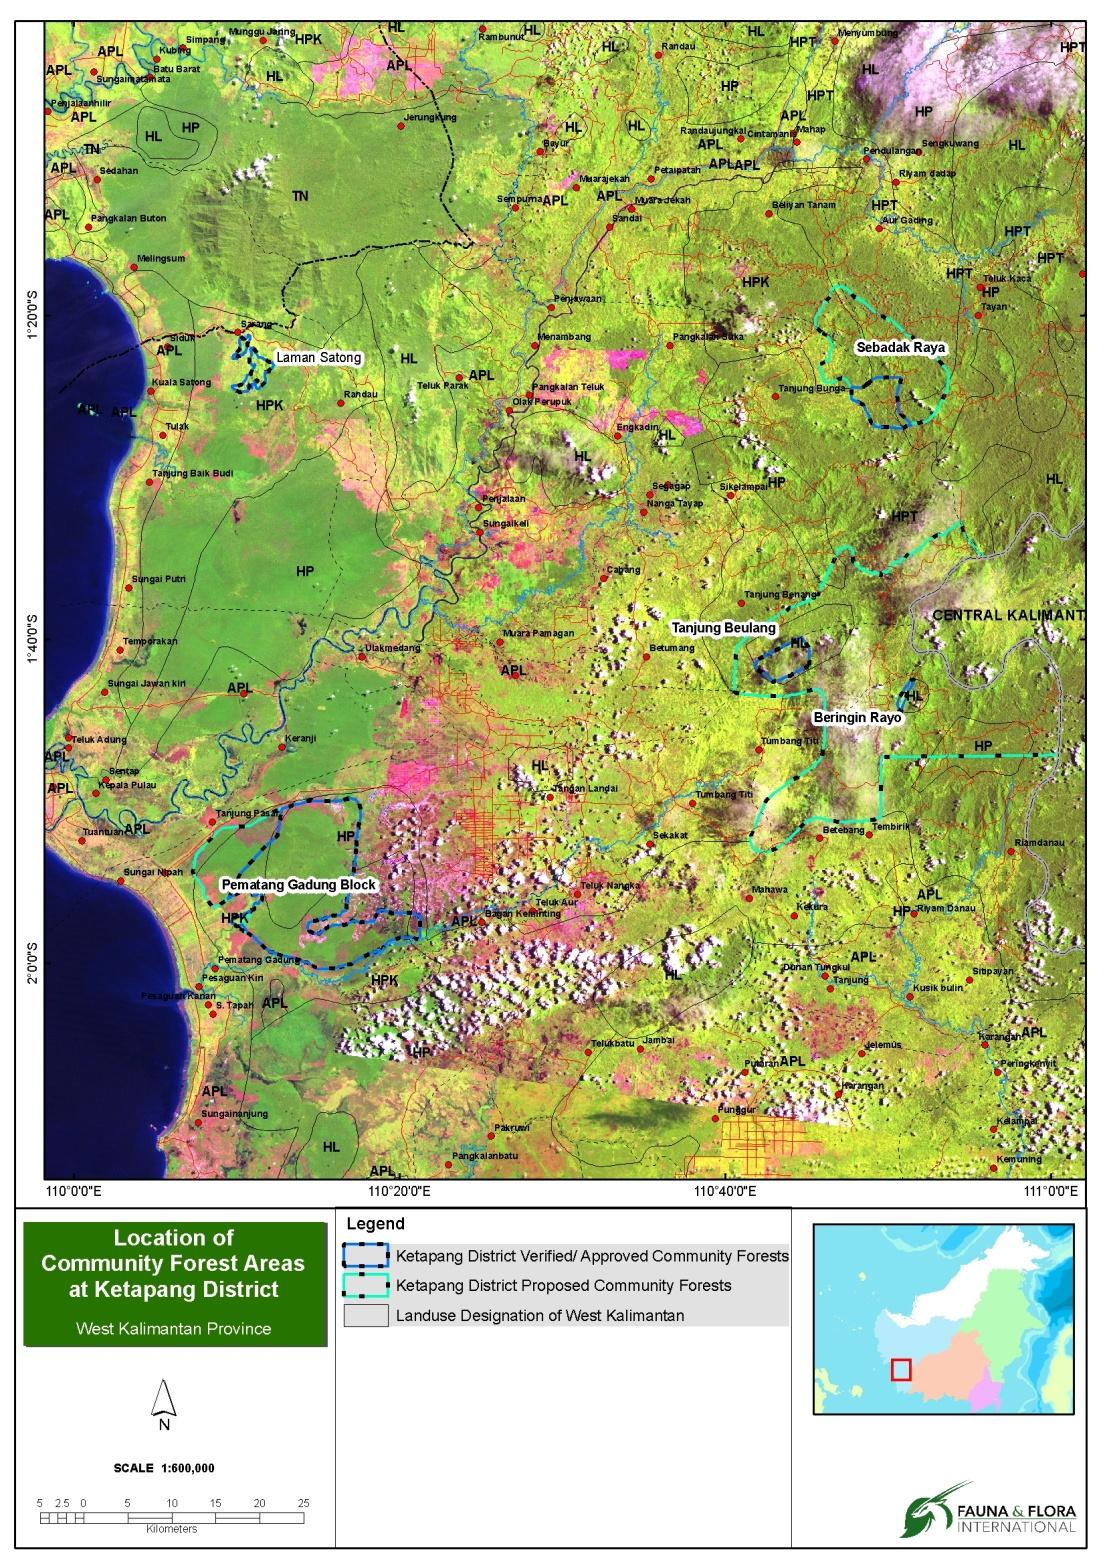 Progress Ketapang 7 desa (28,000 ha) diverifikasi; 6 desa (14,000 ha) SK pencadangan areal HD; 1 desa (14,000 ha) belum dapat